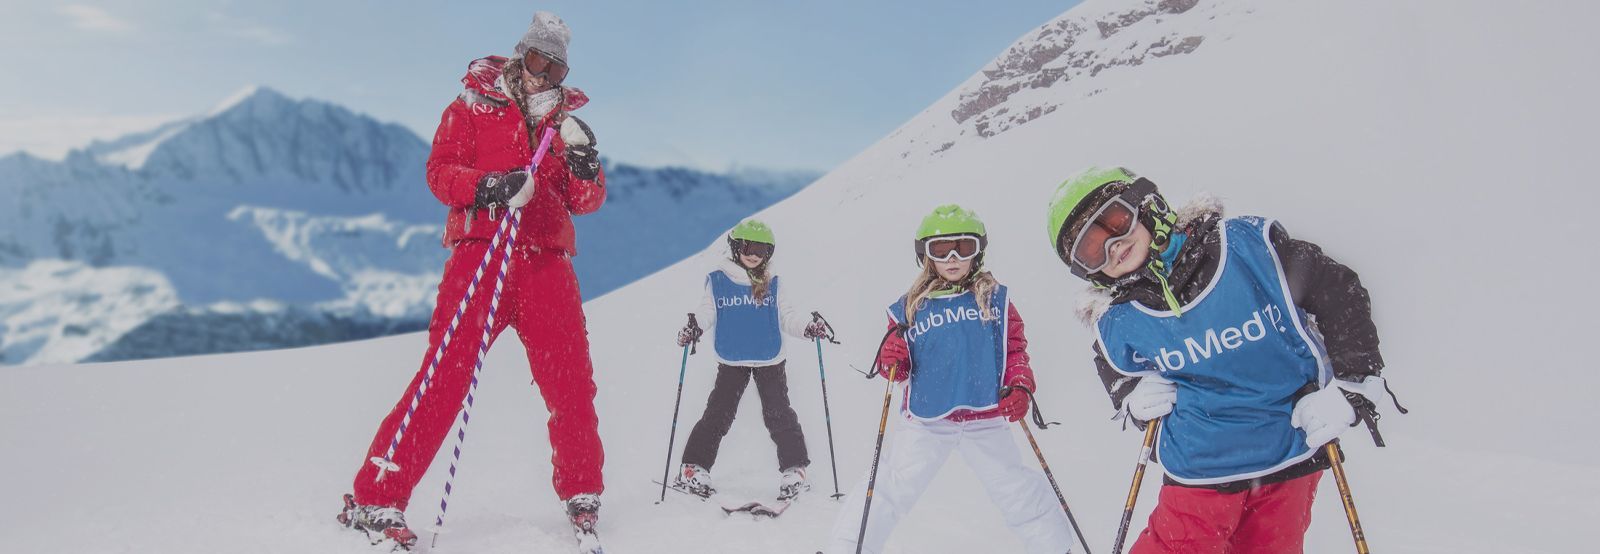 Club Med Ski Holidays